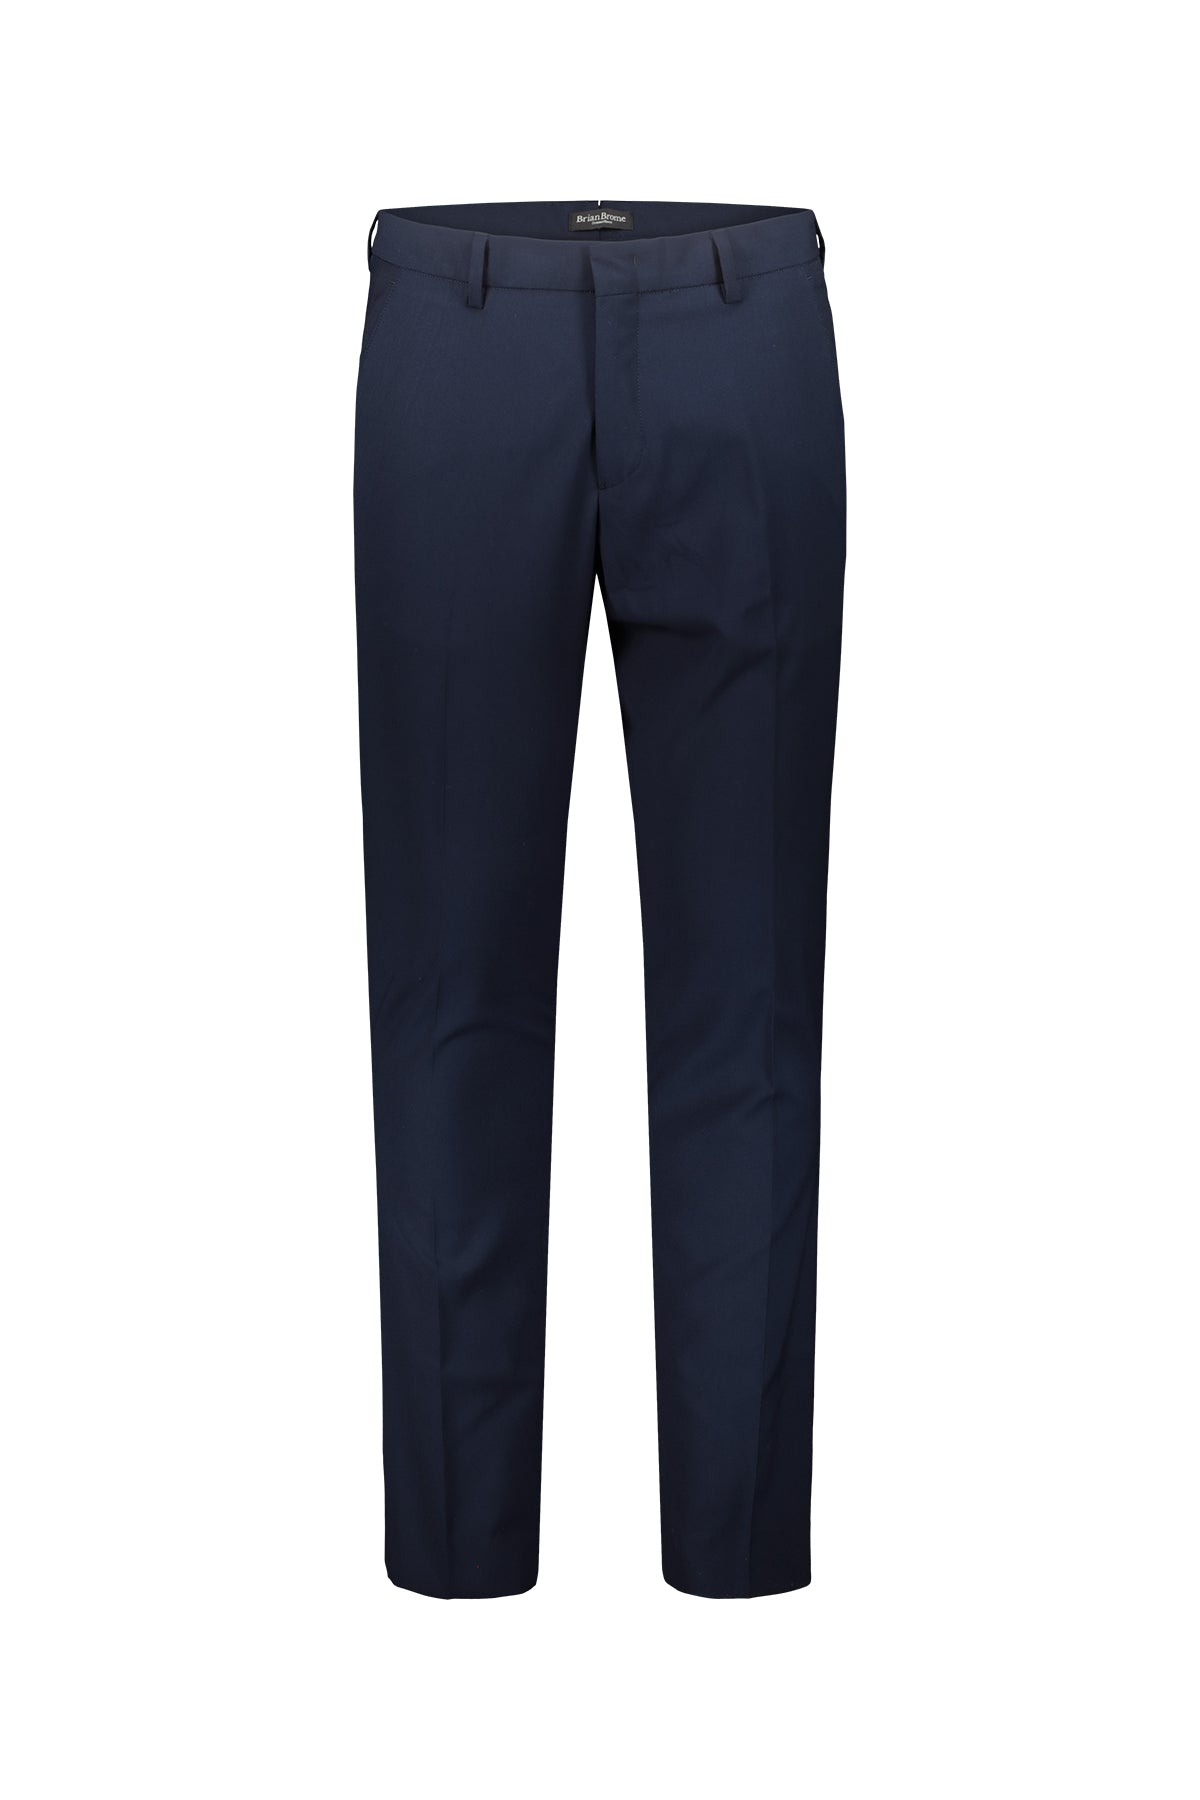 Pantalone Tk America Ca-Miami Blu